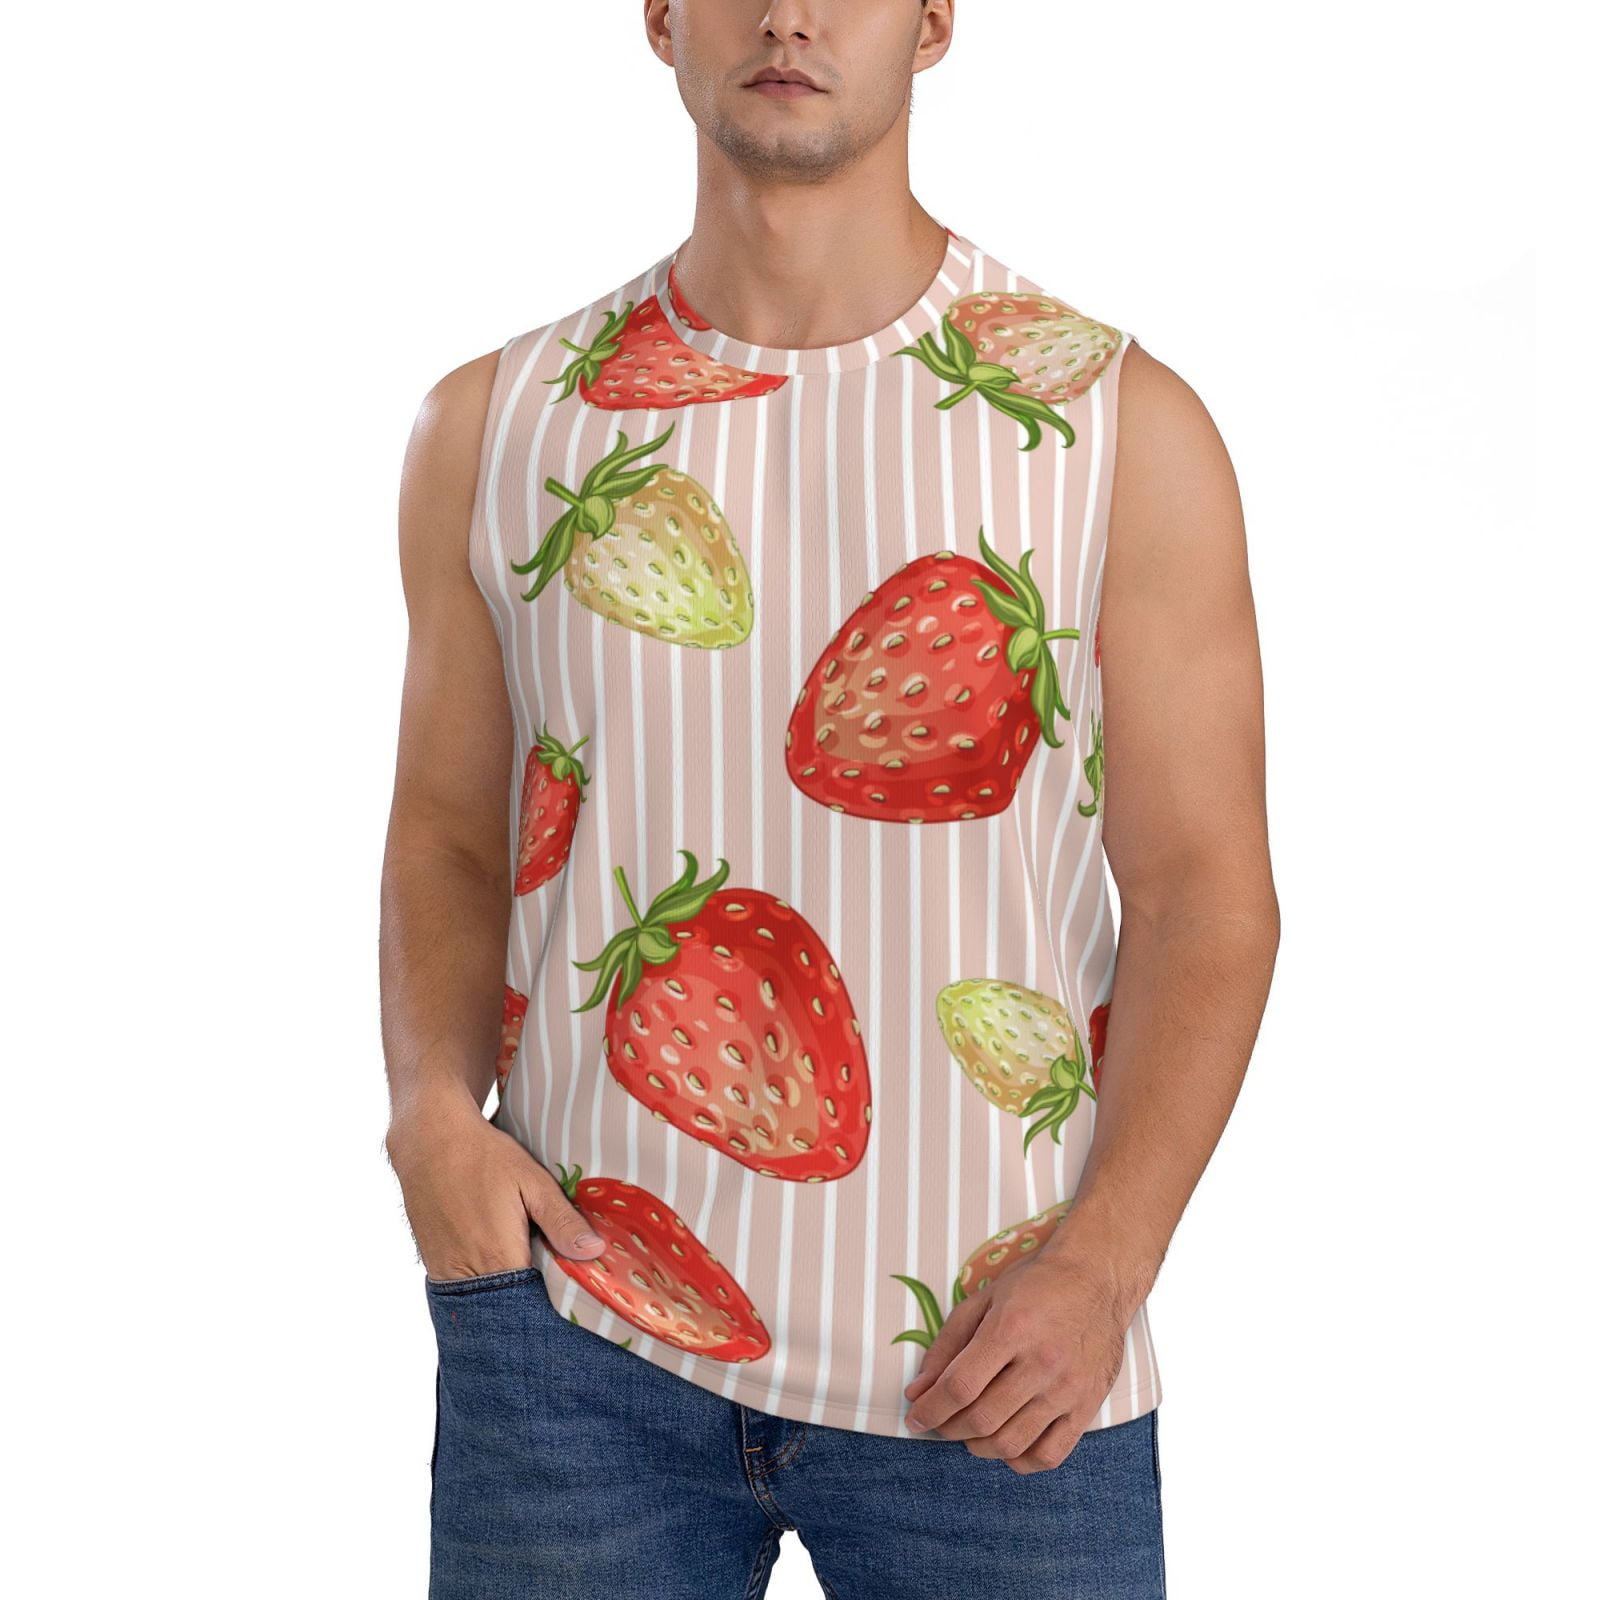 Easygdp Strawberries Men's Breathable Tank Tops Sleeveless Sporty T ...